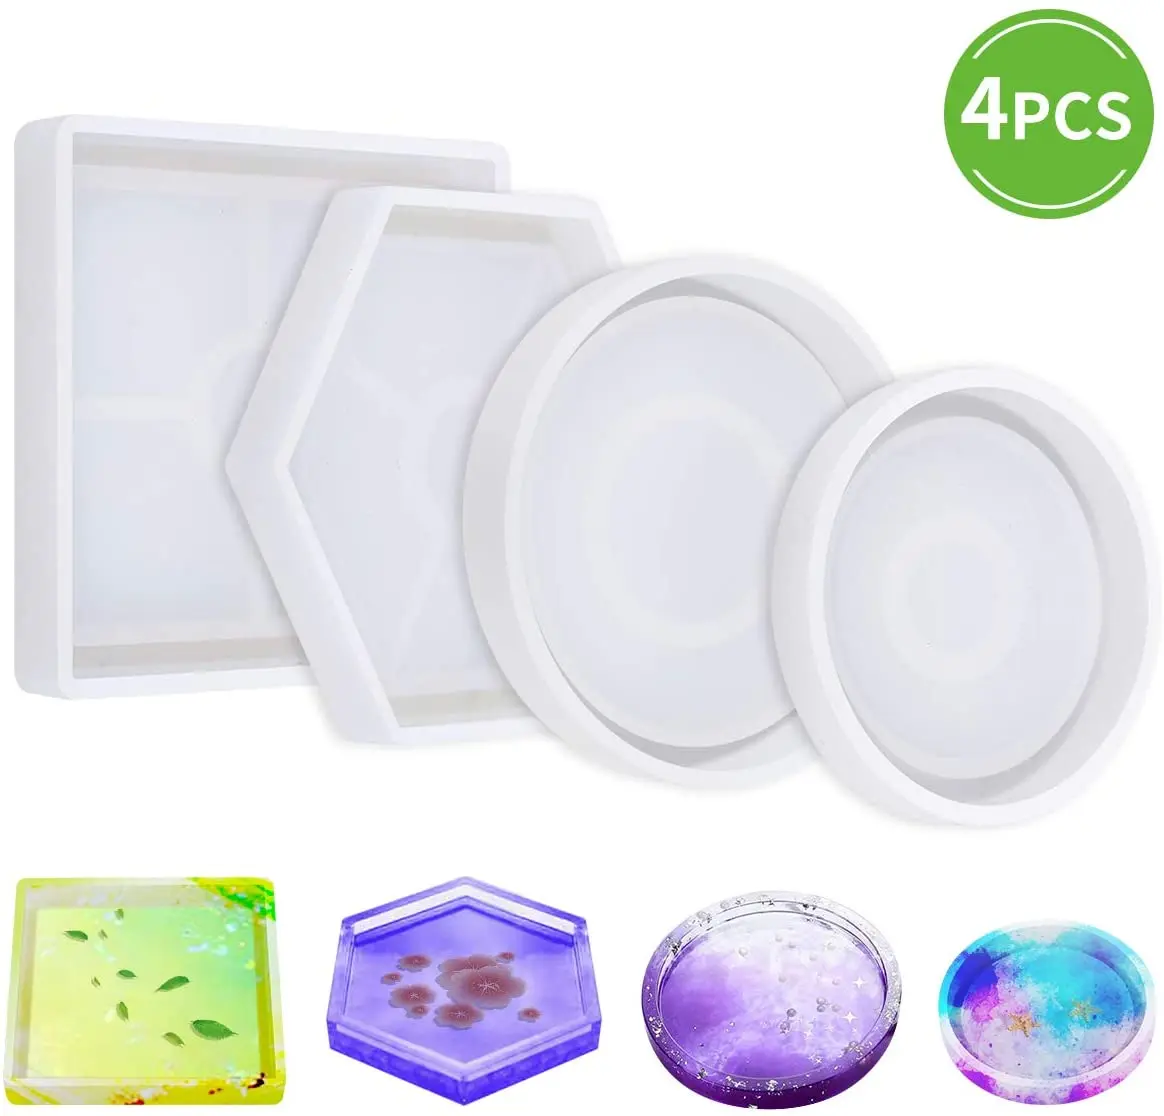 Coaster Mold Epoxy Resin Silicone Molds Diy Eco-Friendly Sturdy